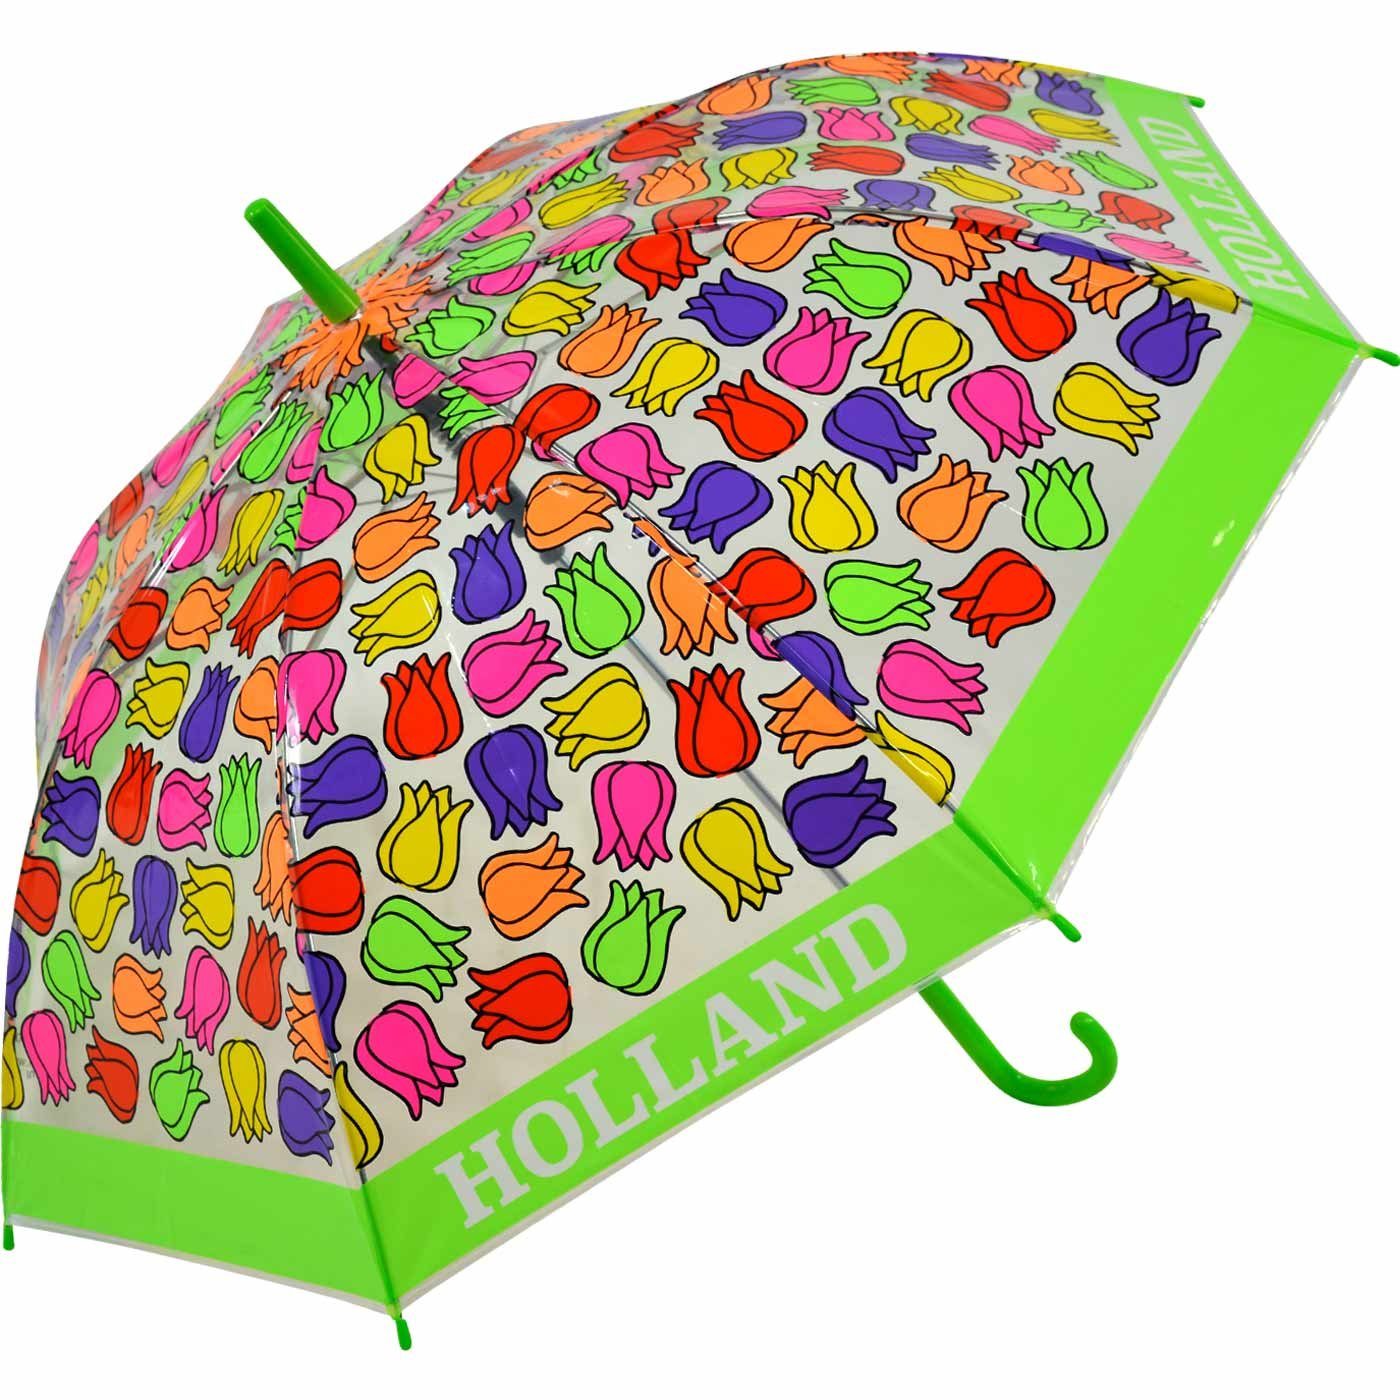 Impliva Langregenschirm Falconetti Tulpen, bunt transparent durchsichtig - Kinderschirm grün